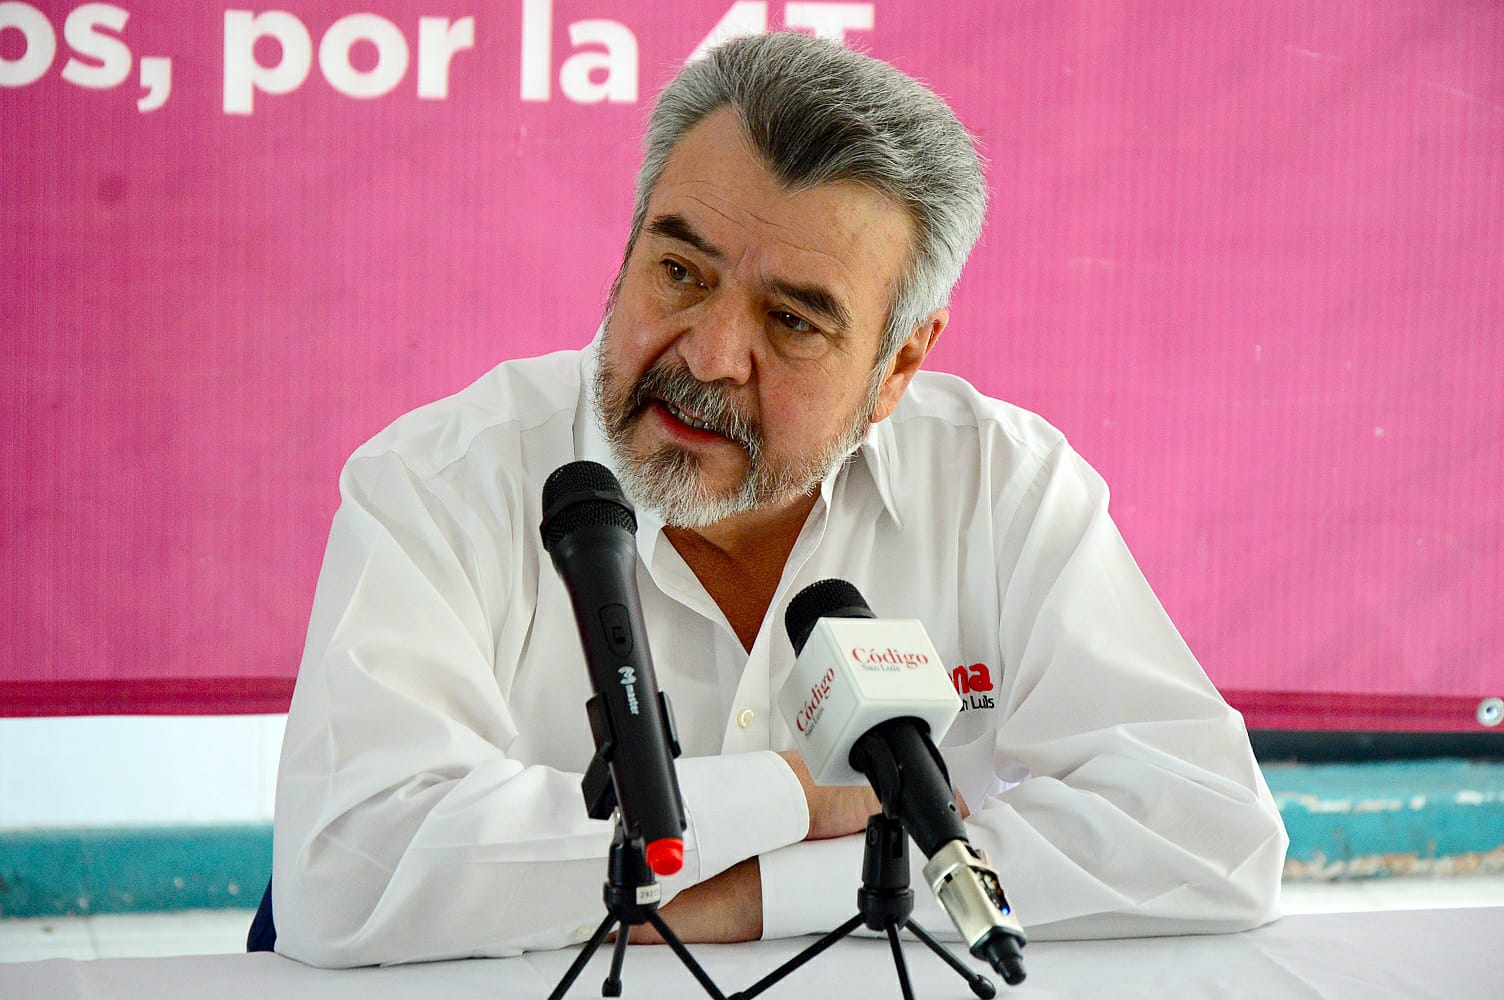  La gubernatura de San Luis Potosí se ganó con dinero: Sergio Serrano